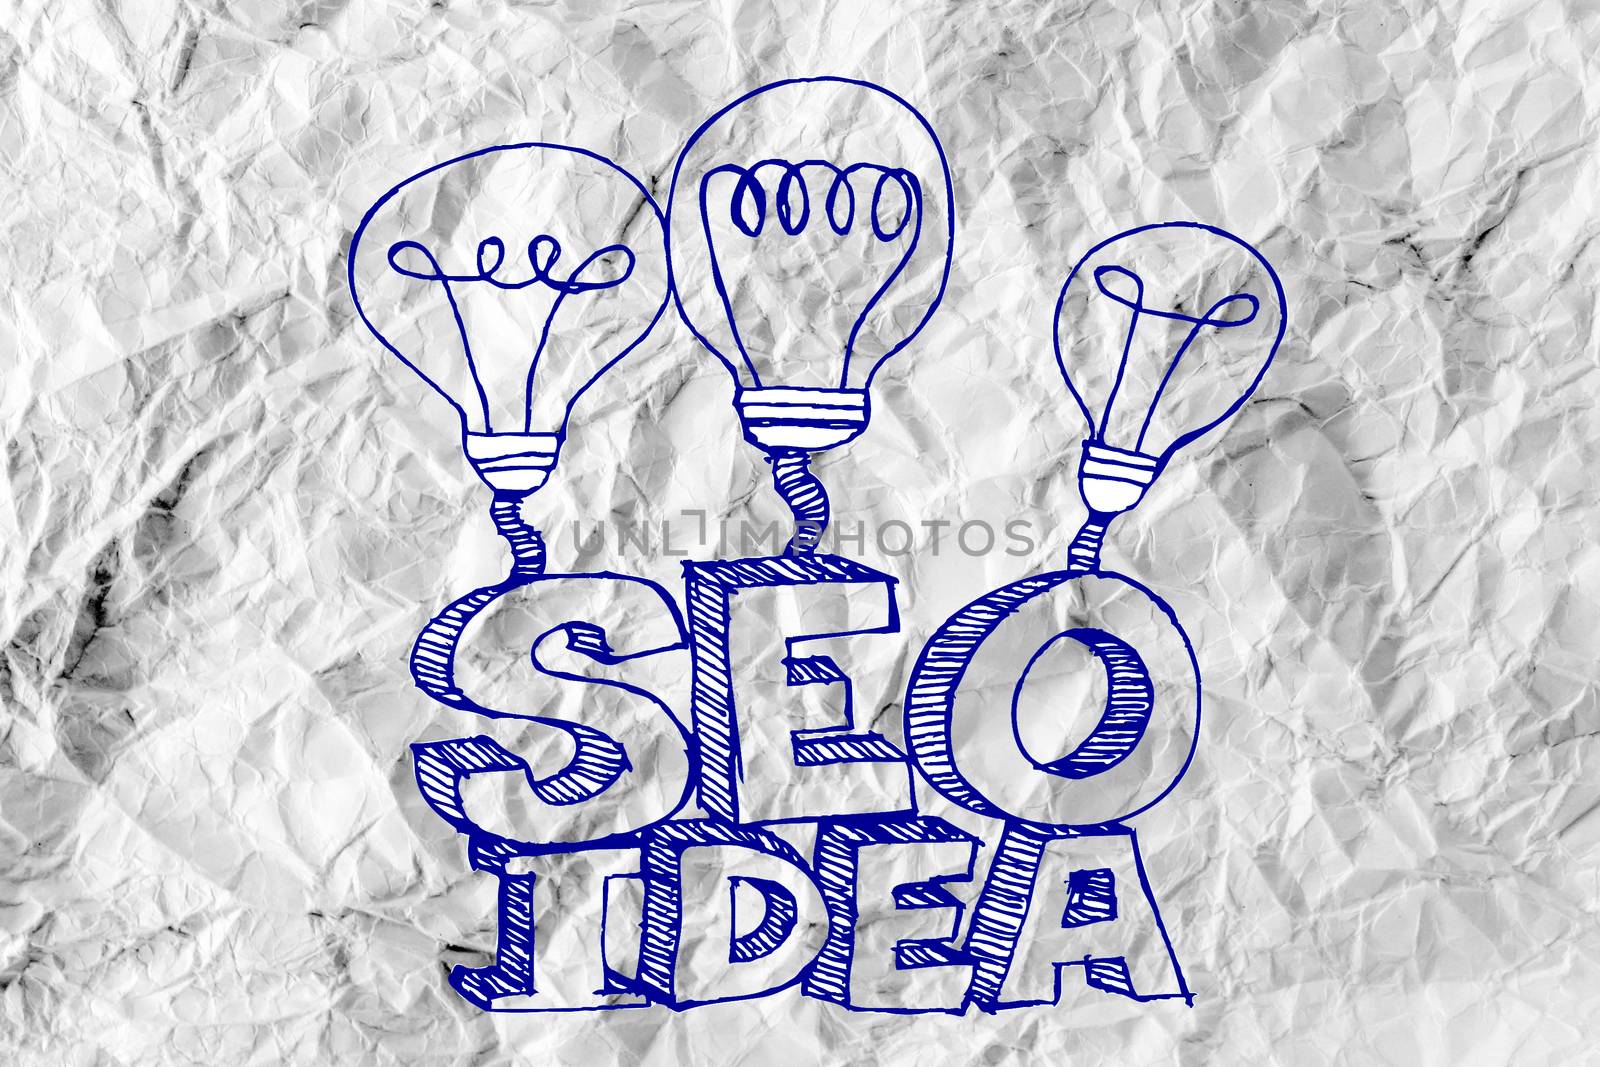 Seo Idea SEO Search Engine Optimization on crumpled paper by kiddaikiddee